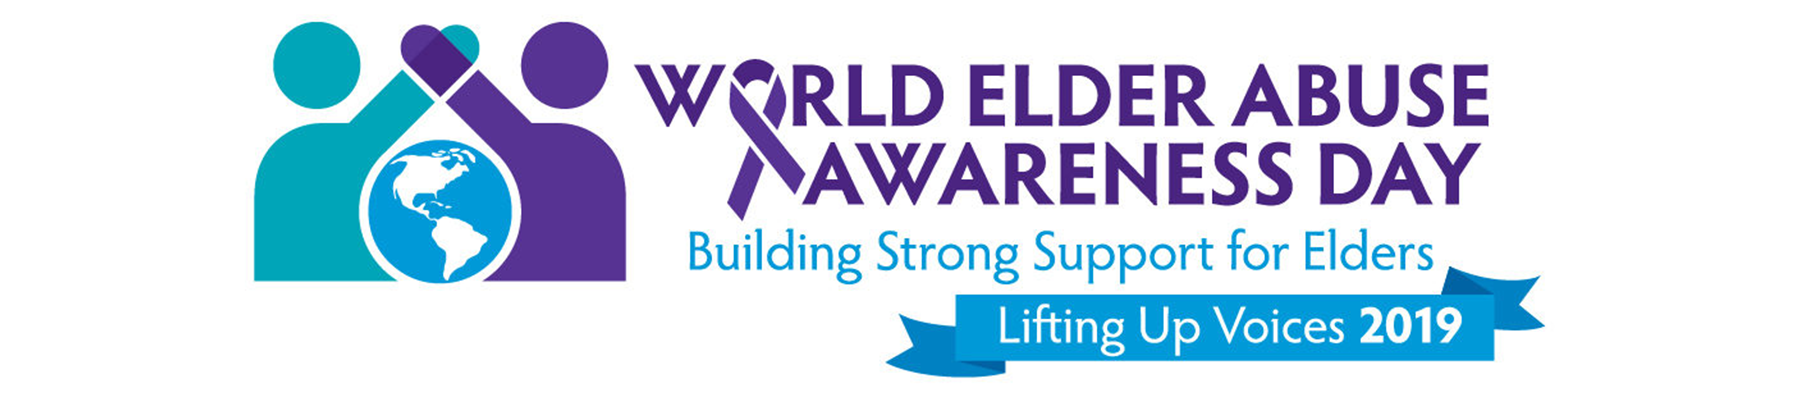 World Elder Abuse Awareness Day Event